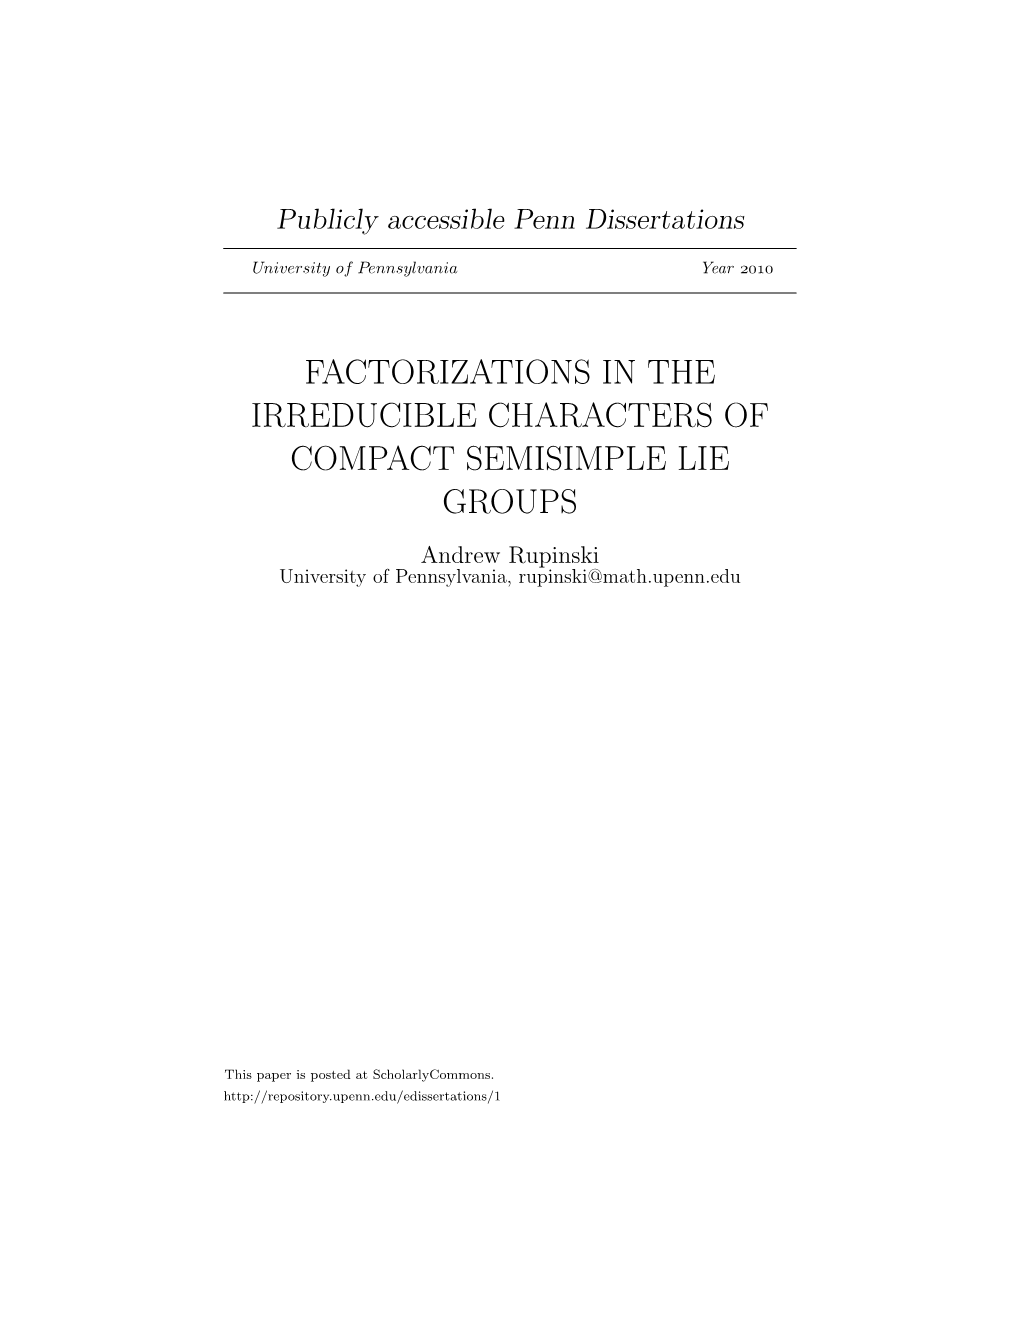 FACTORIZATIONS in the IRREDUCIBLE CHARACTERS of COMPACT SEMISIMPLE LIE GROUPS Andrew Rupinski University of Pennsylvania, Rupinski@Math.Upenn.Edu